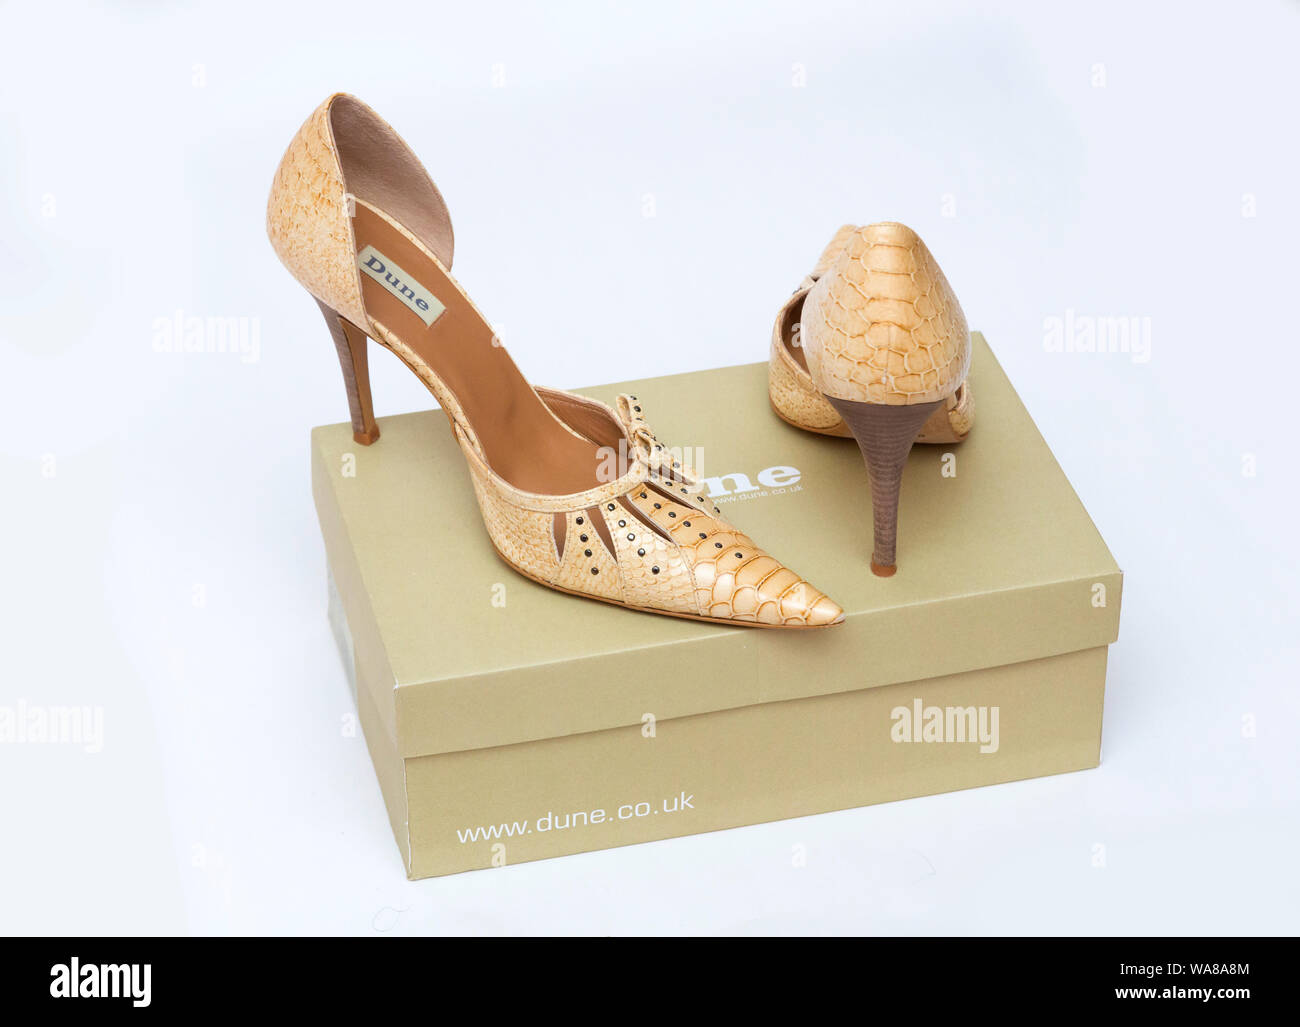 Dune womens shoes Stock Photo